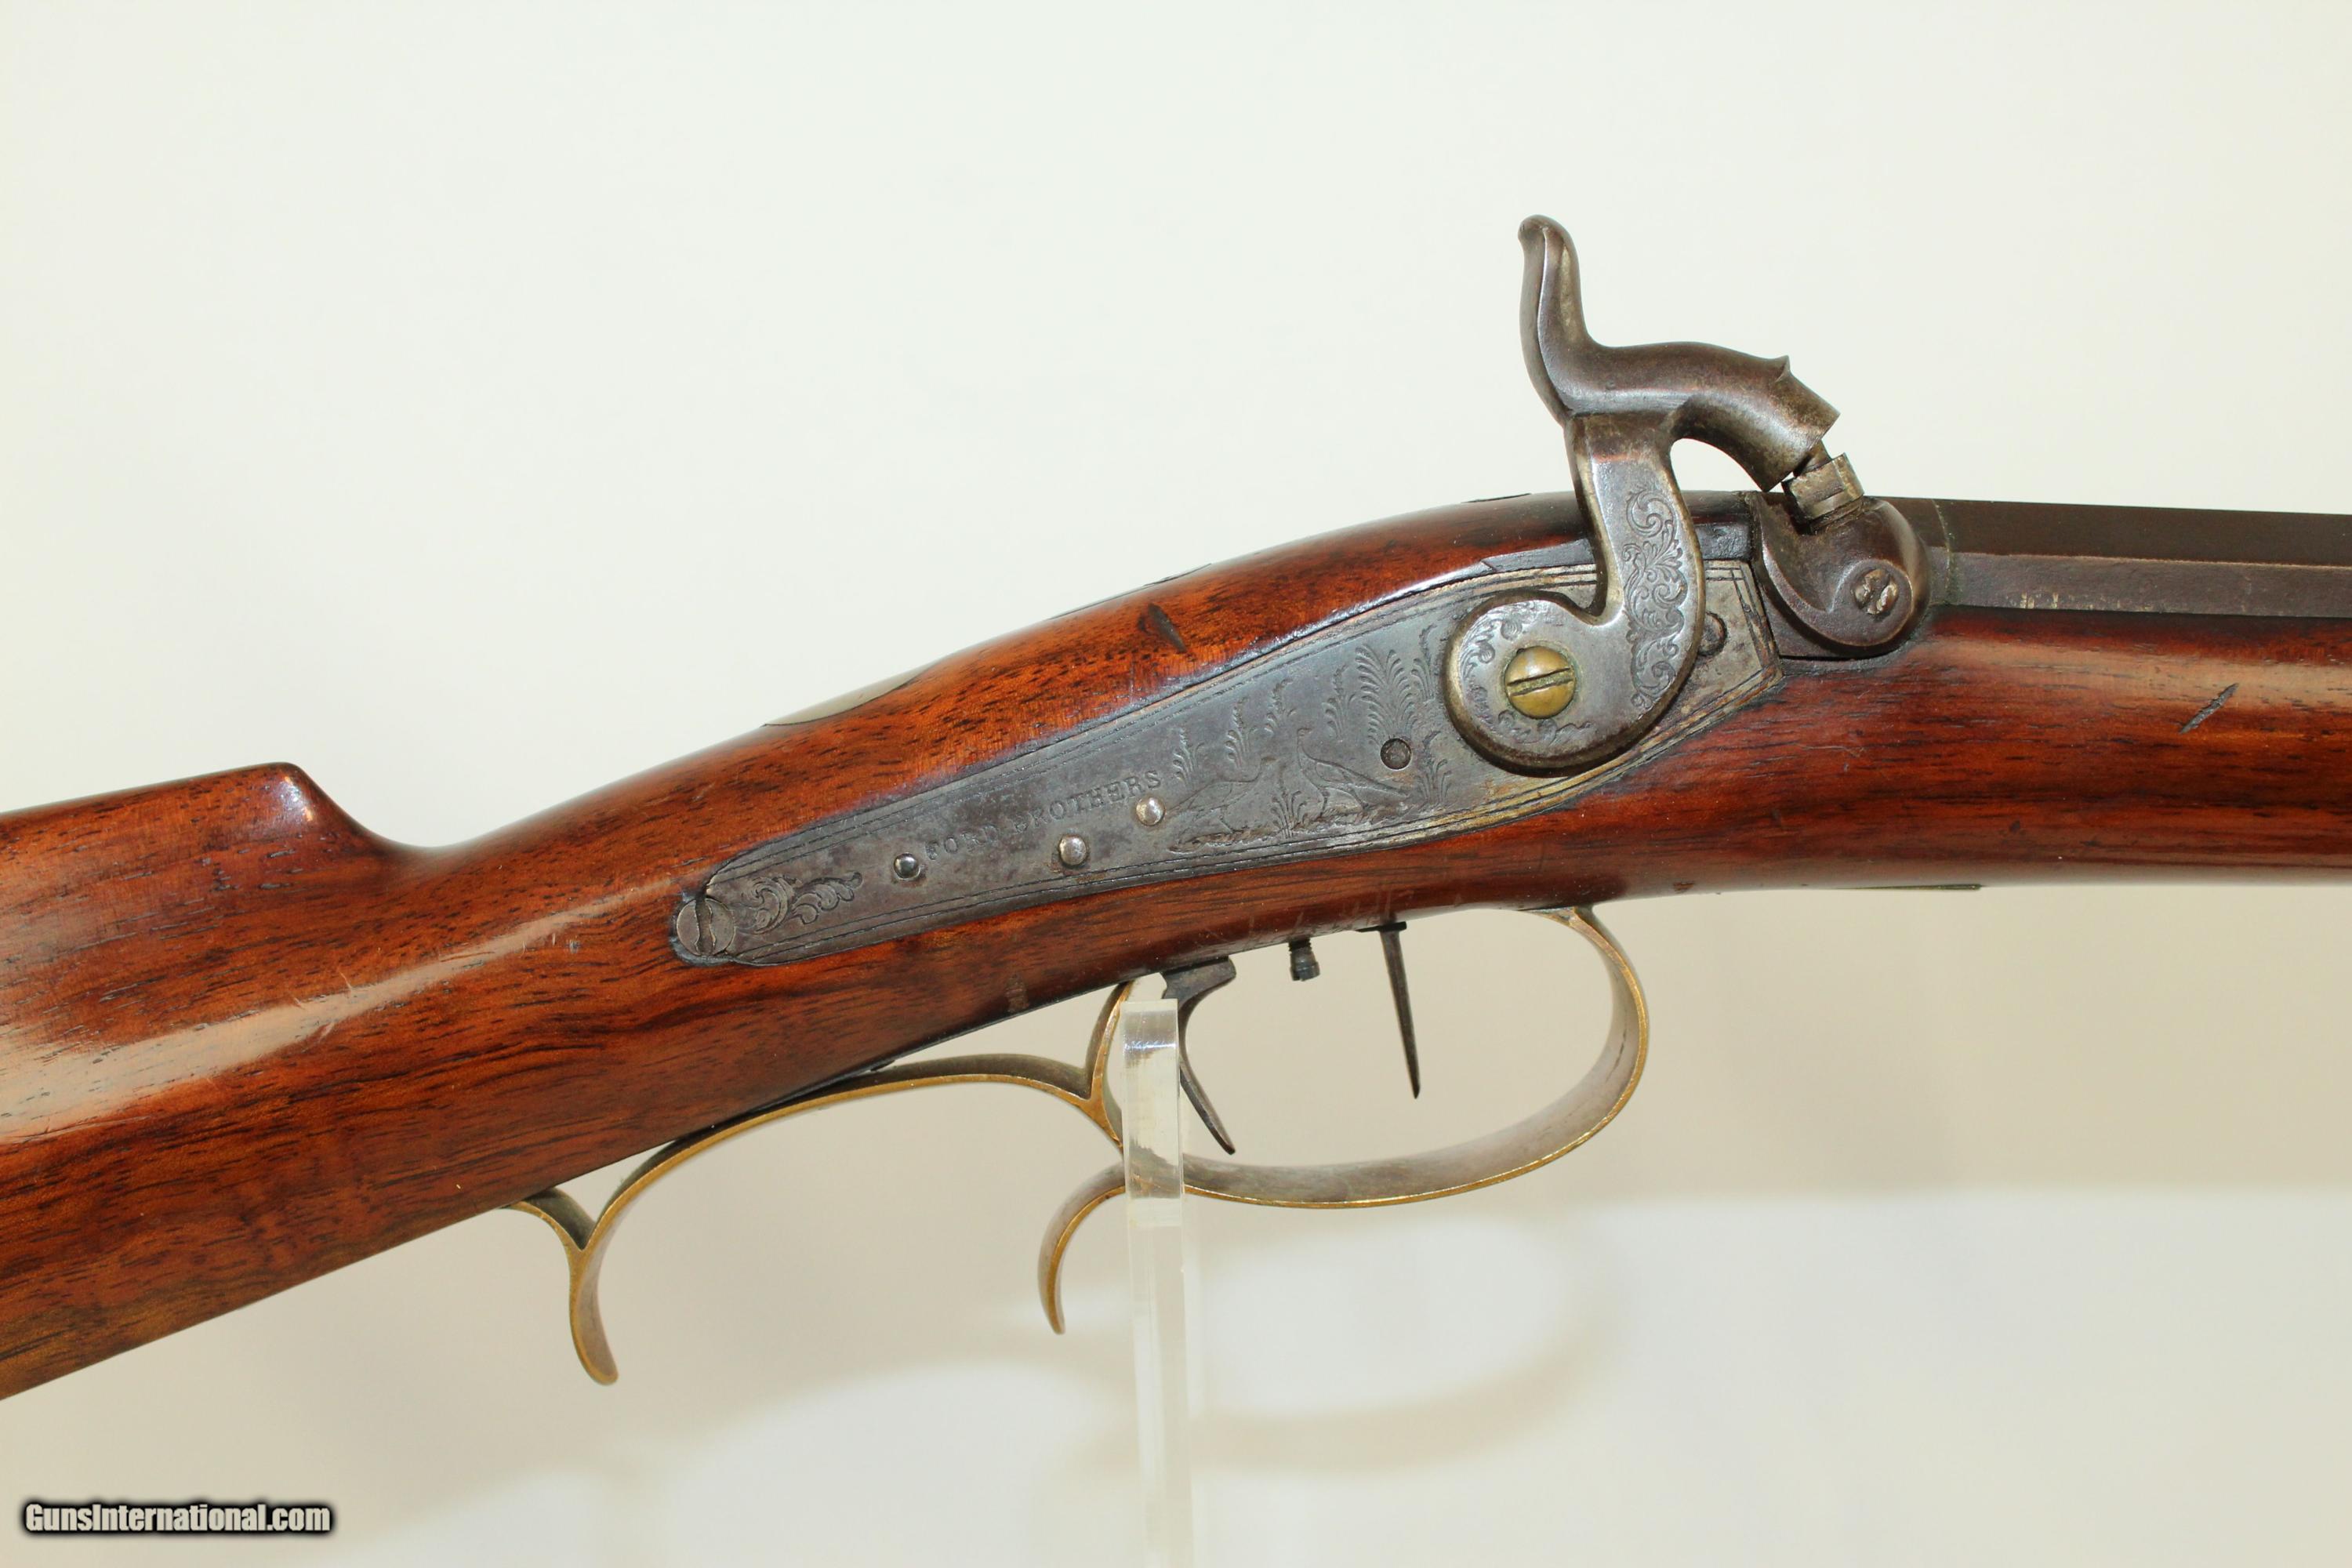 R. MOCK” Antique Half Stock KENTUCKY Rifle